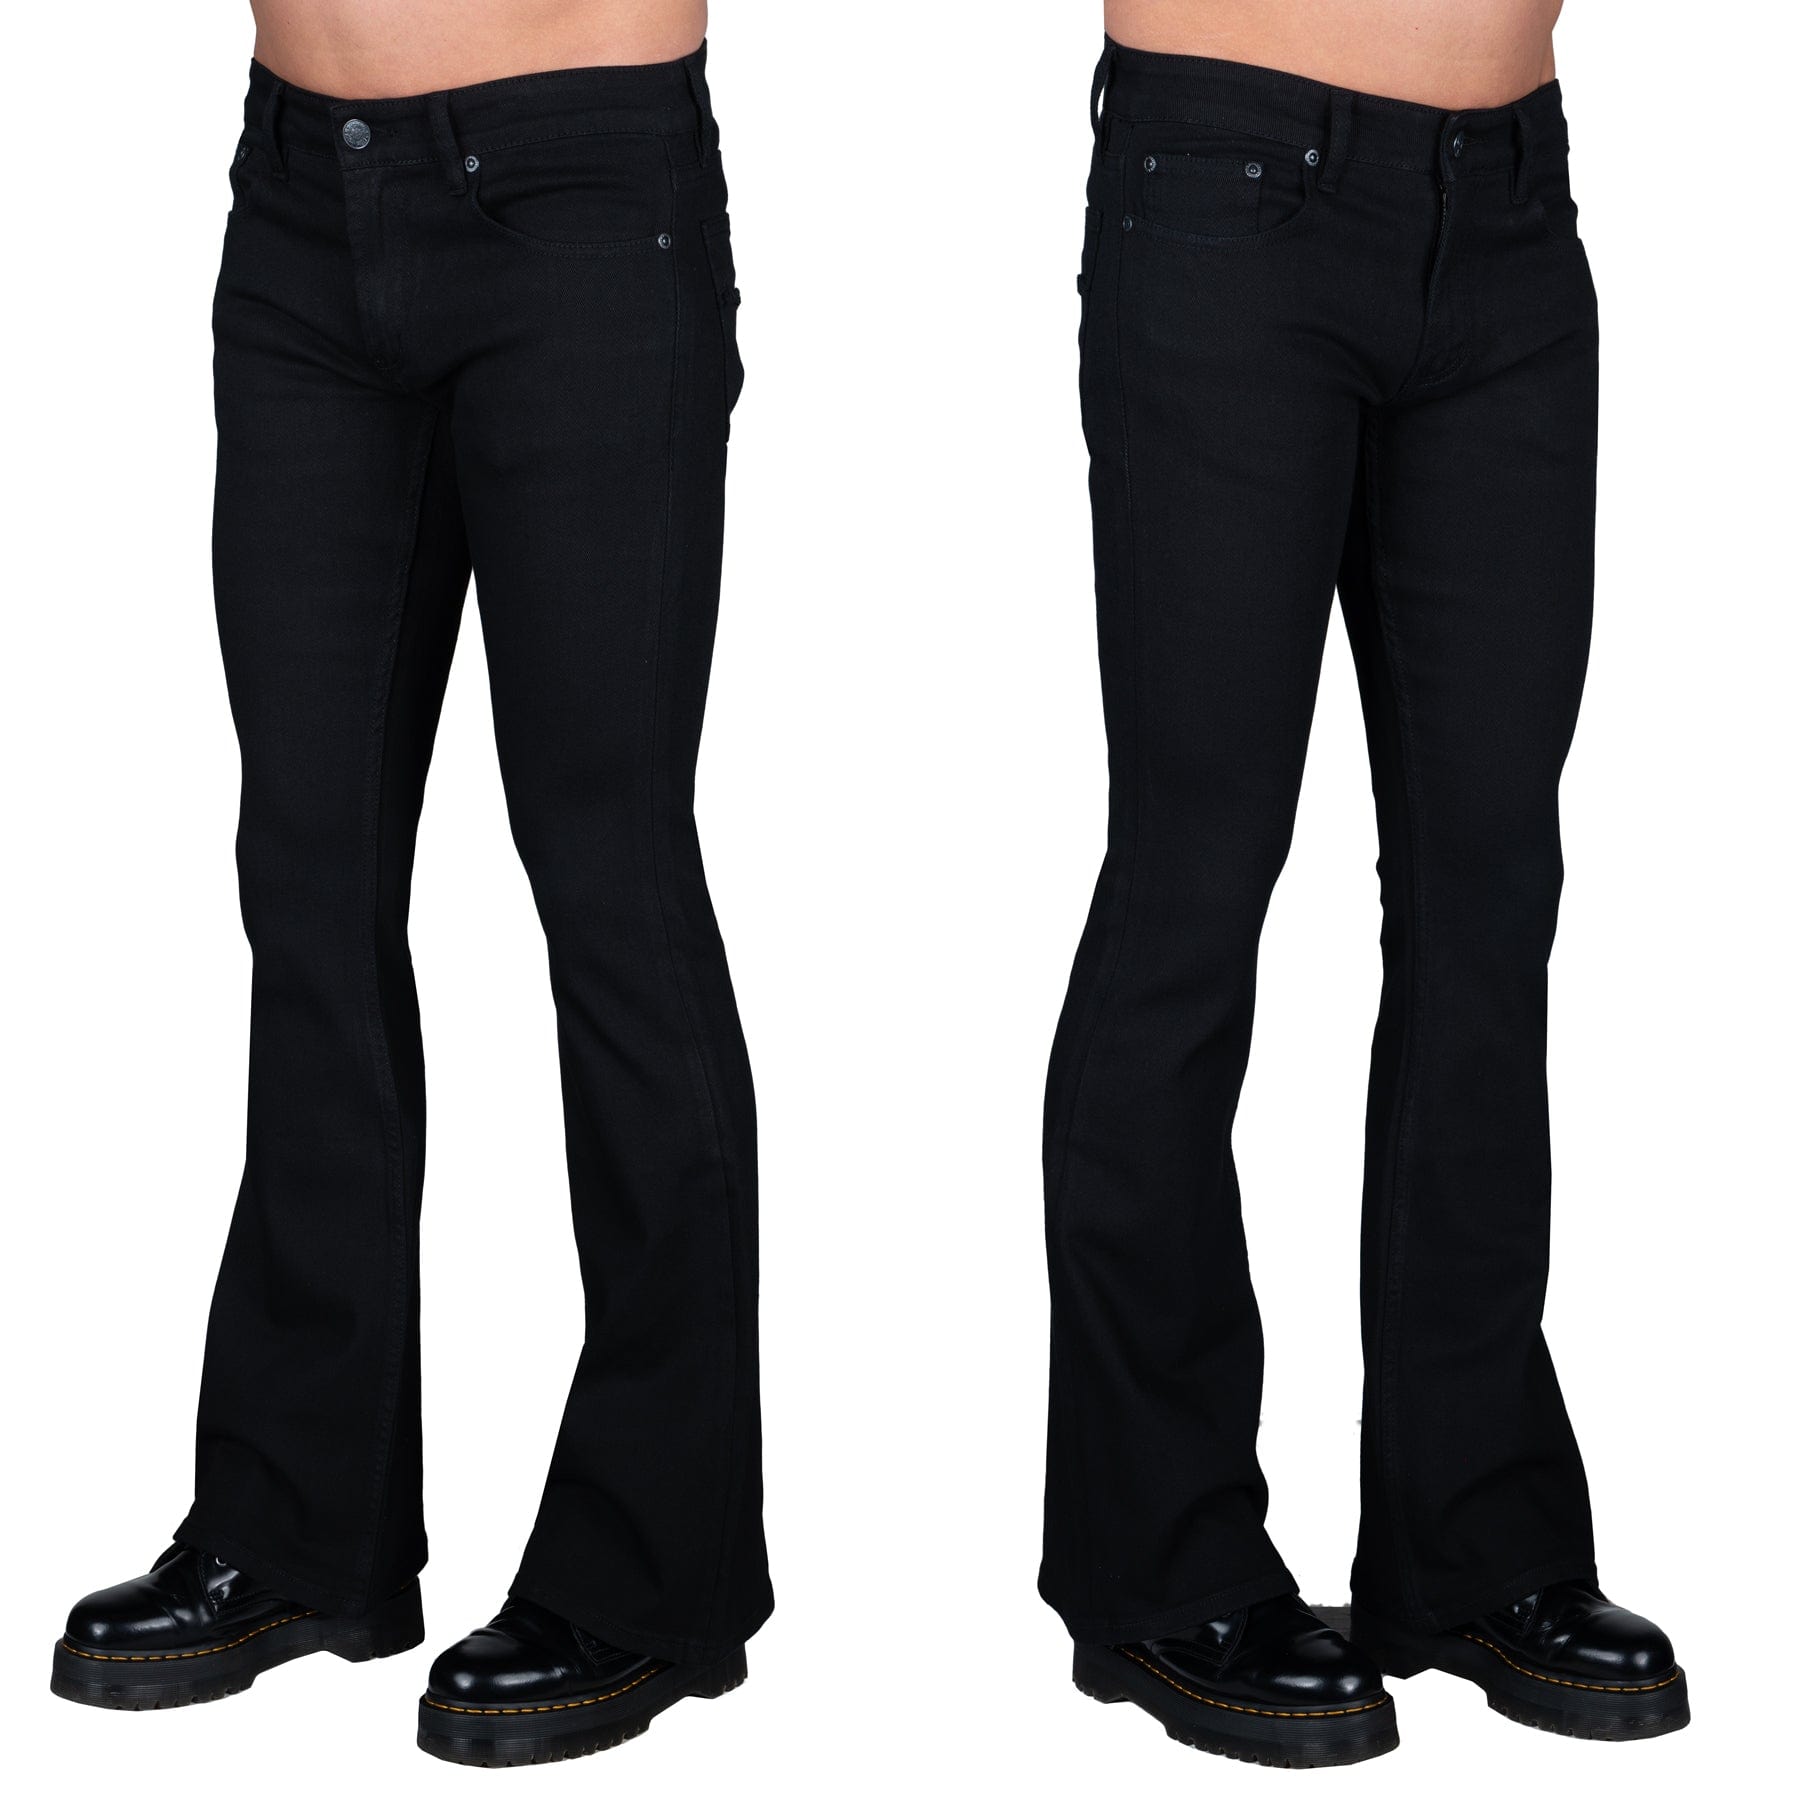 Wornstar Clothing Starchaser Mens Pants - Black